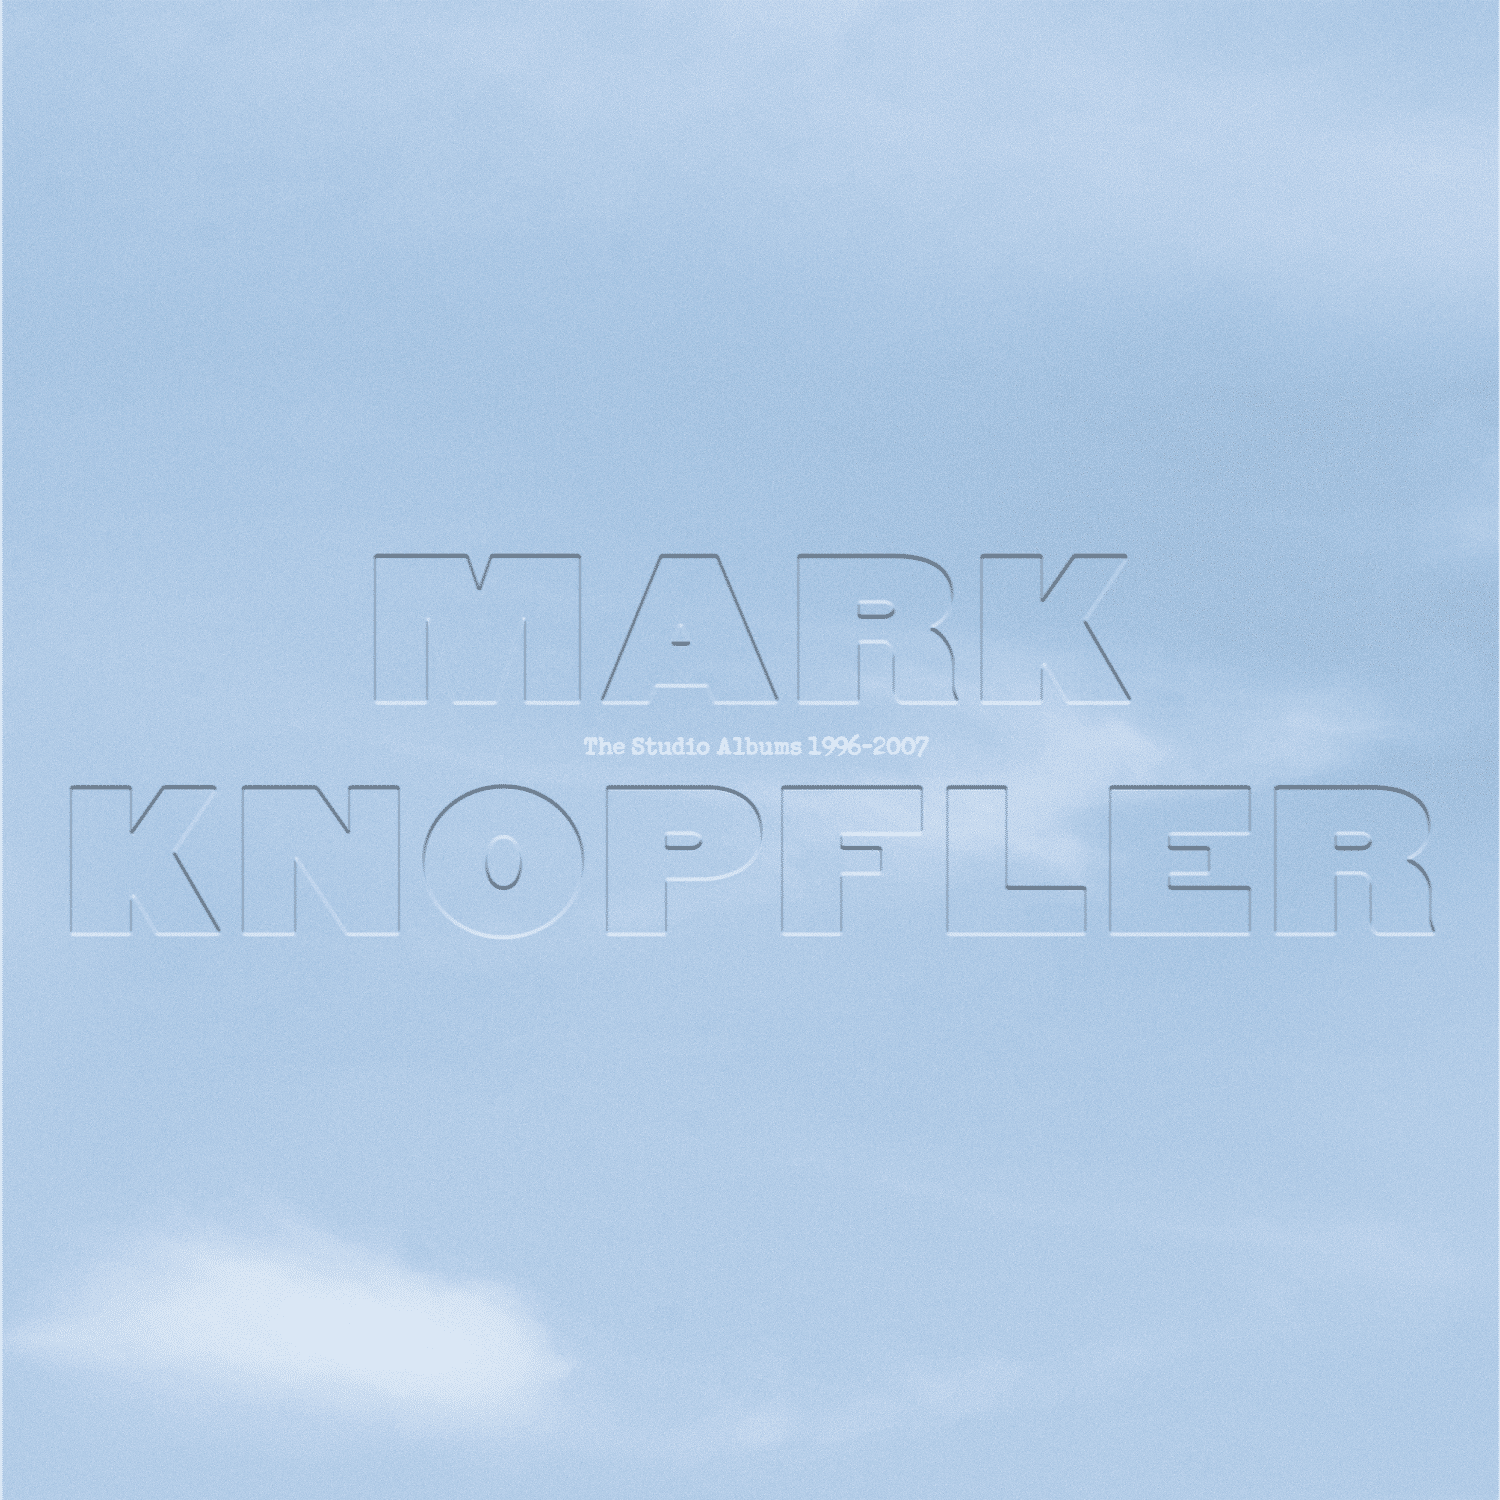 Mark Knopfler discography - Wikipedia